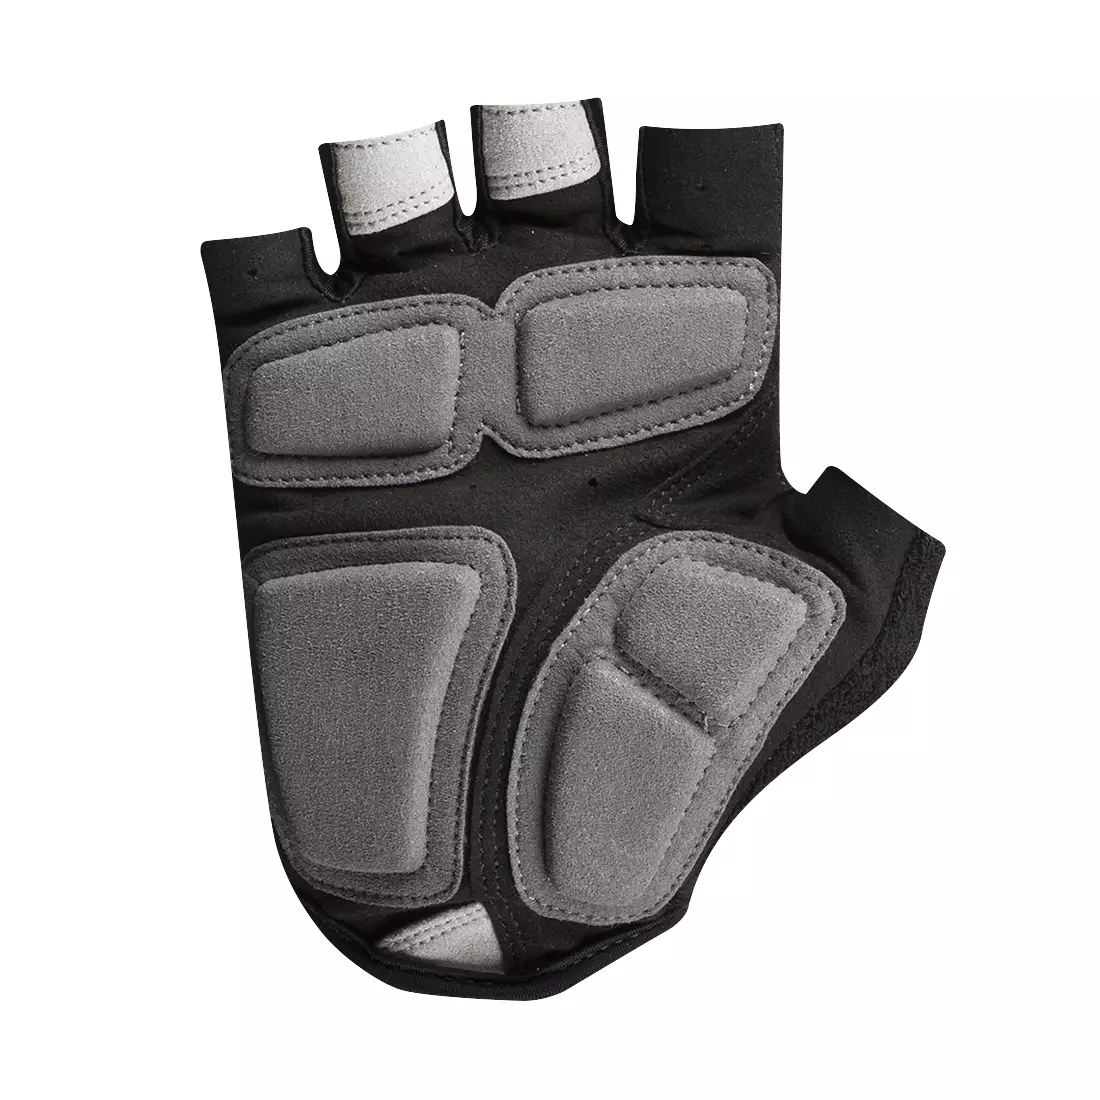 PEARL IZUMI SELECT men's cycling gloves black 14141802